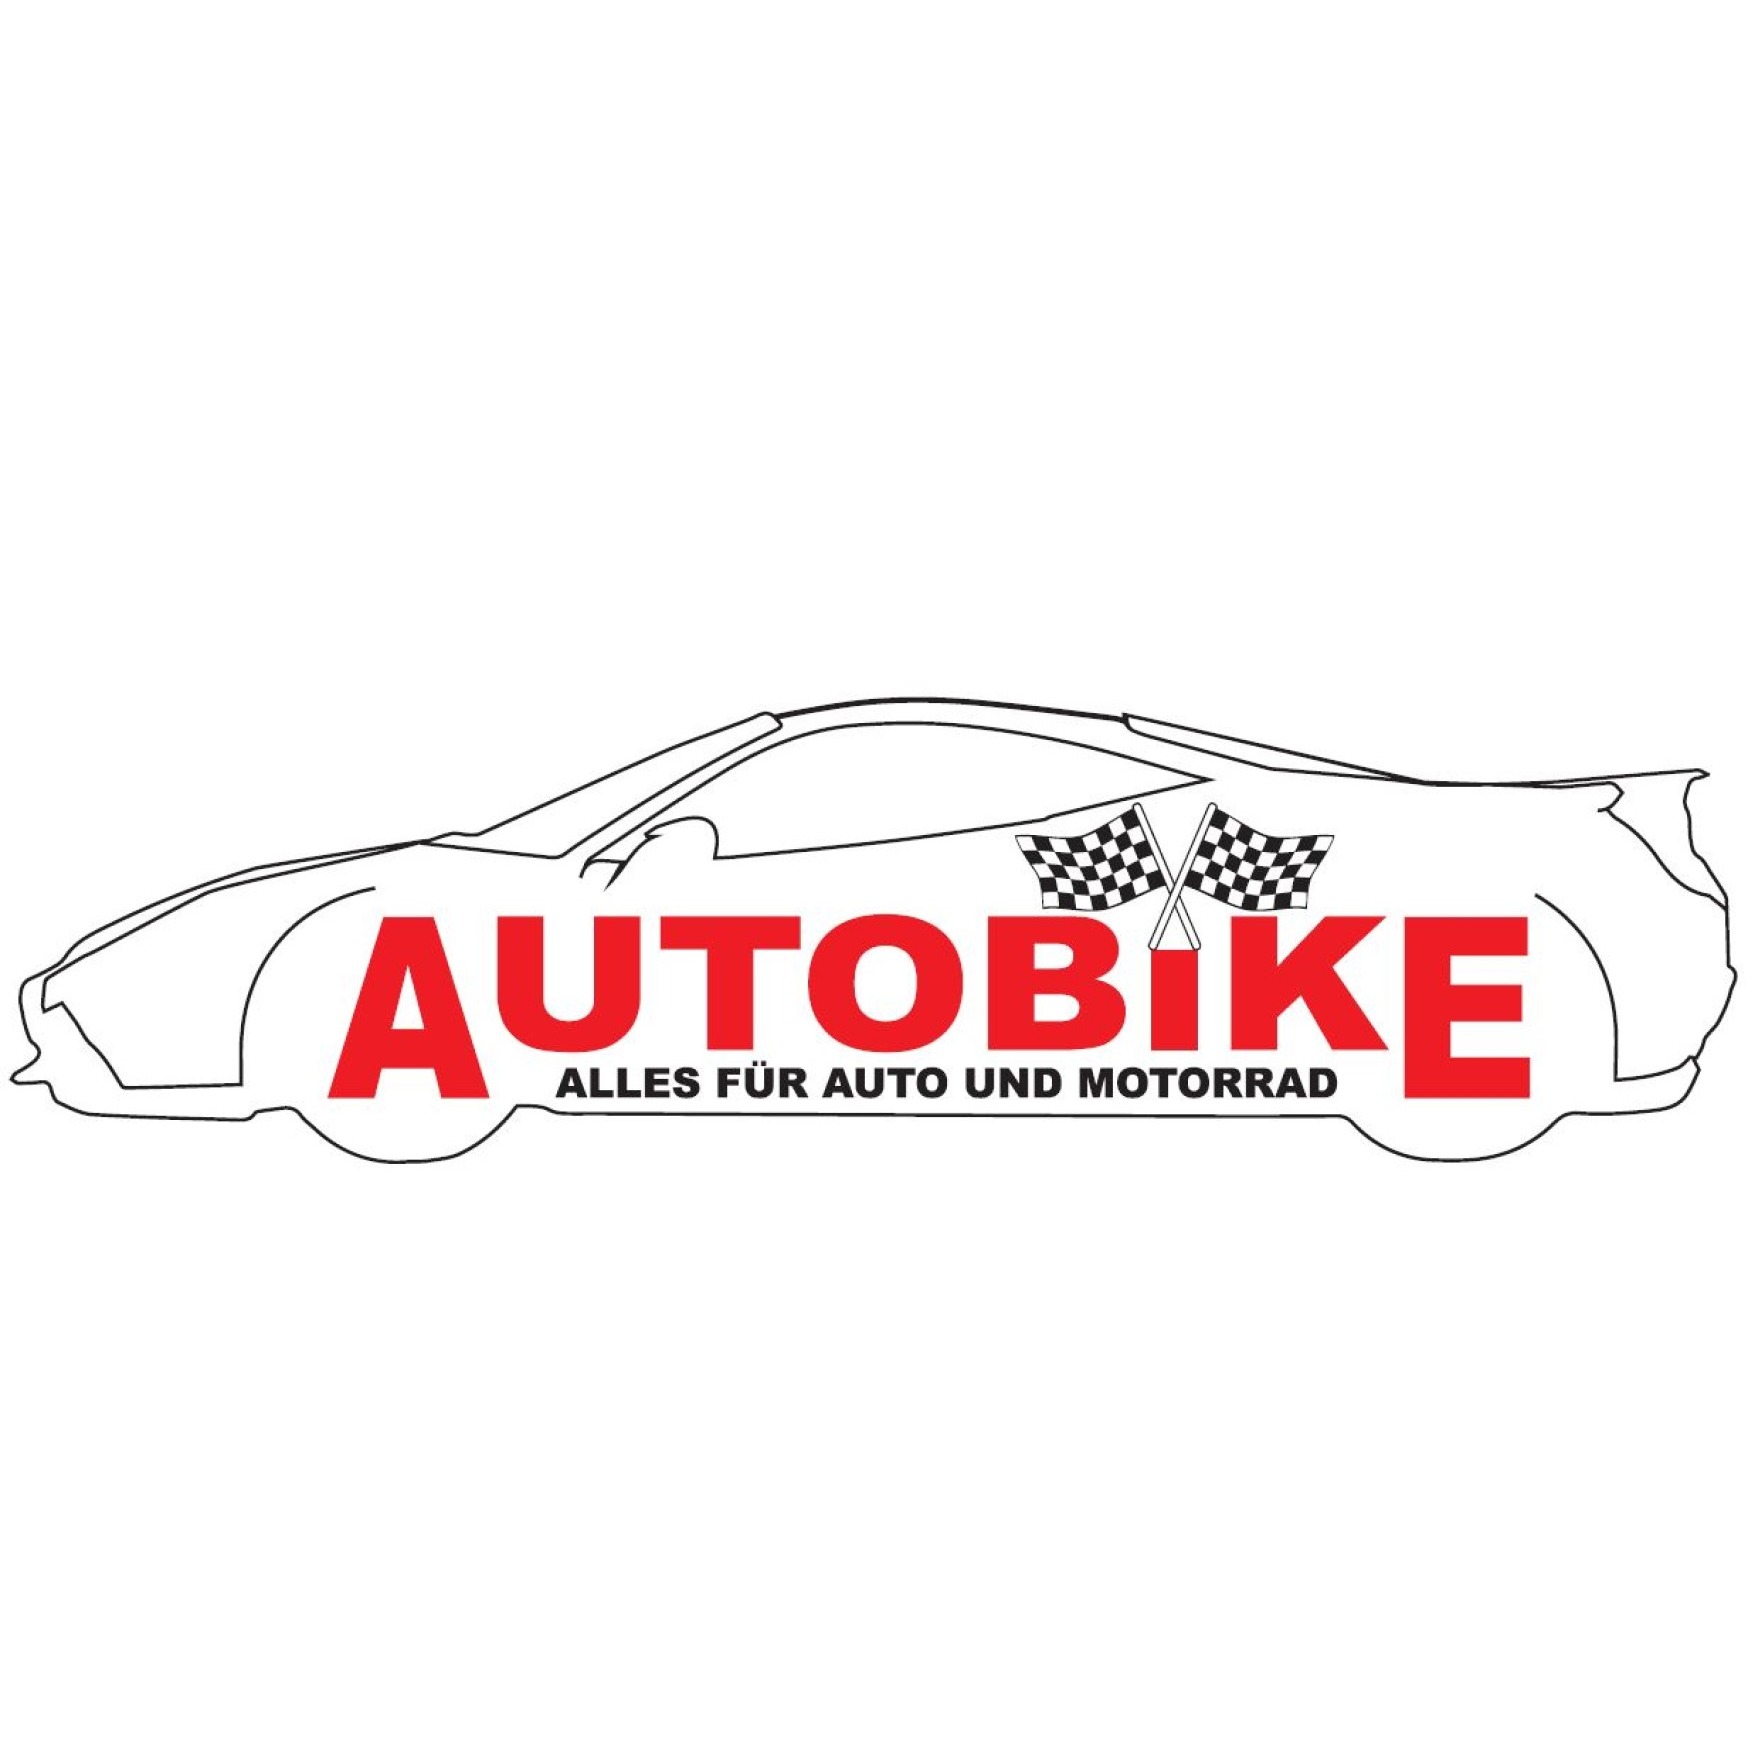 ABS Autobike GmbH Logo